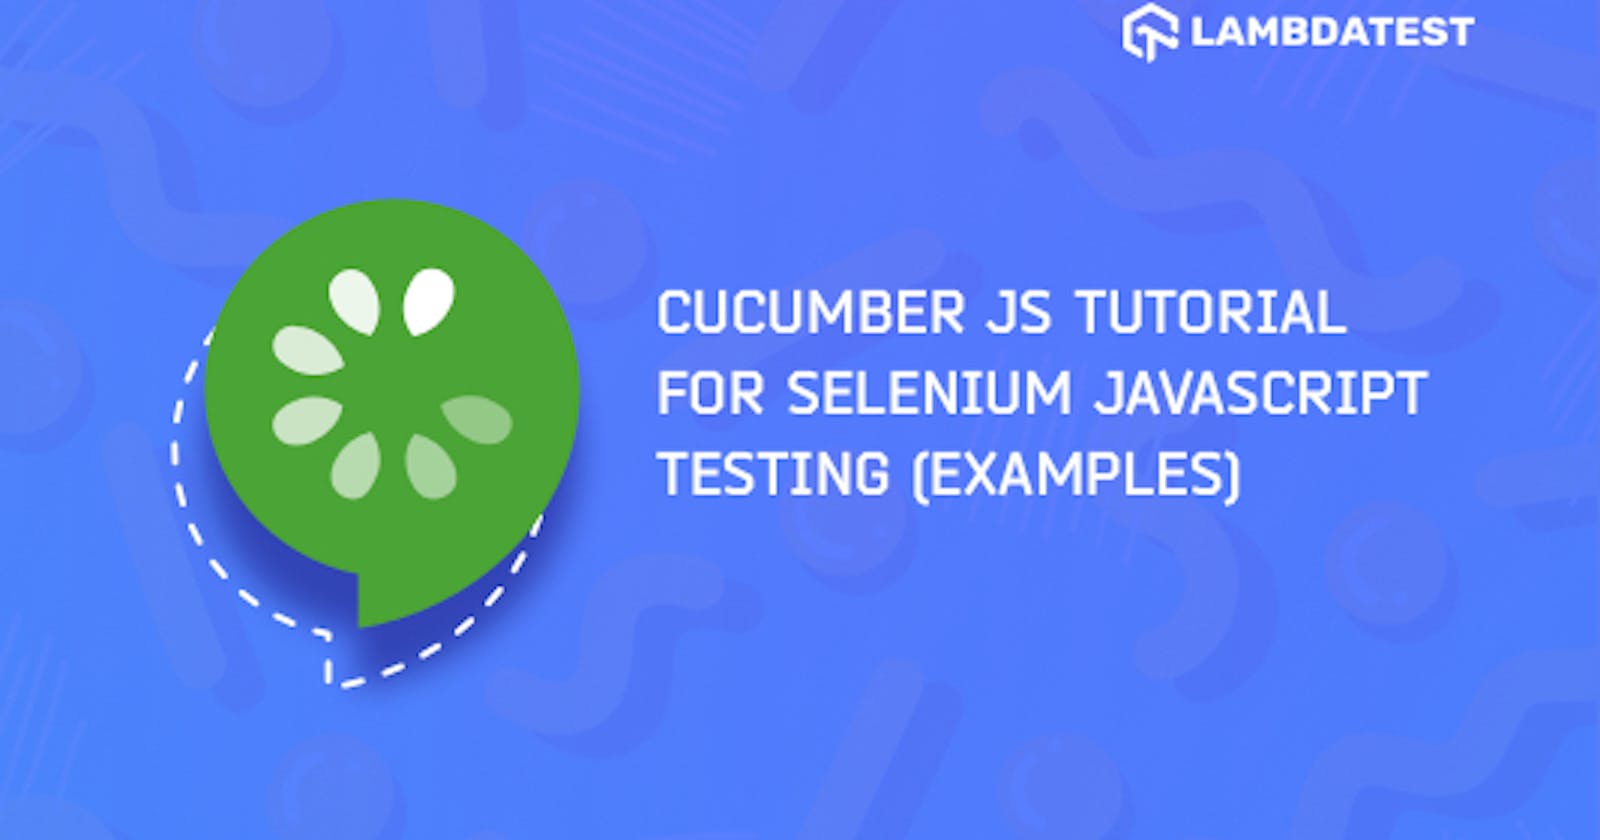 Cucumber.js Tutorial with Examples For Selenium JavaScript